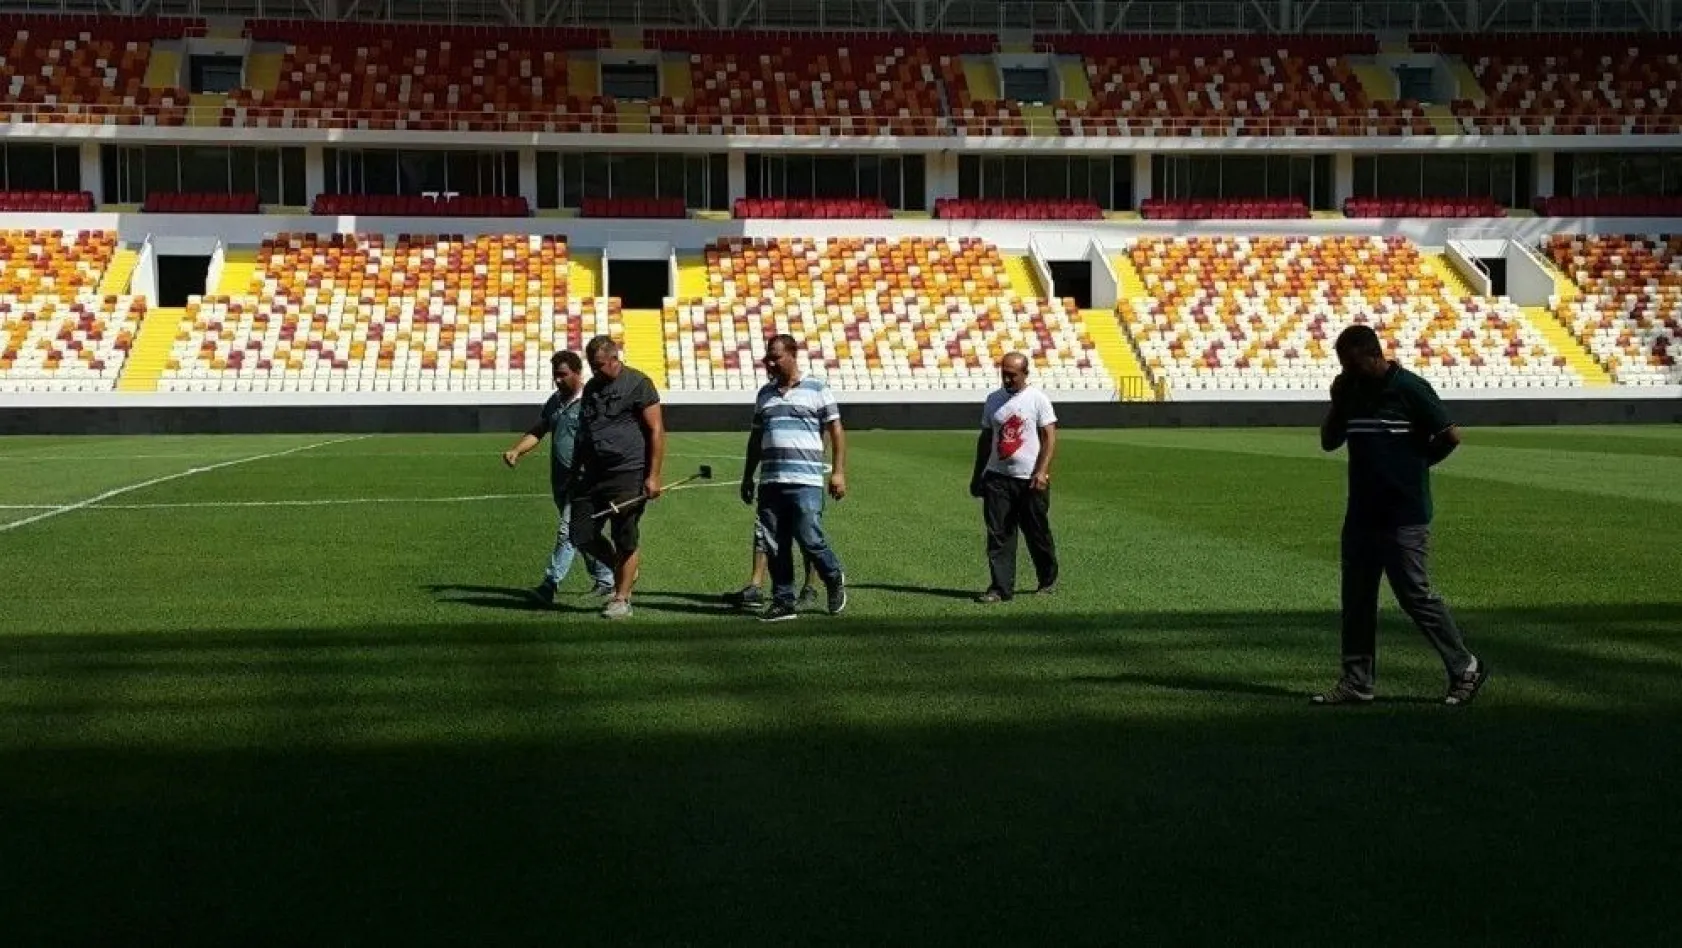 Malatya Stadyumu Antalya maçına hazırlanıyor
